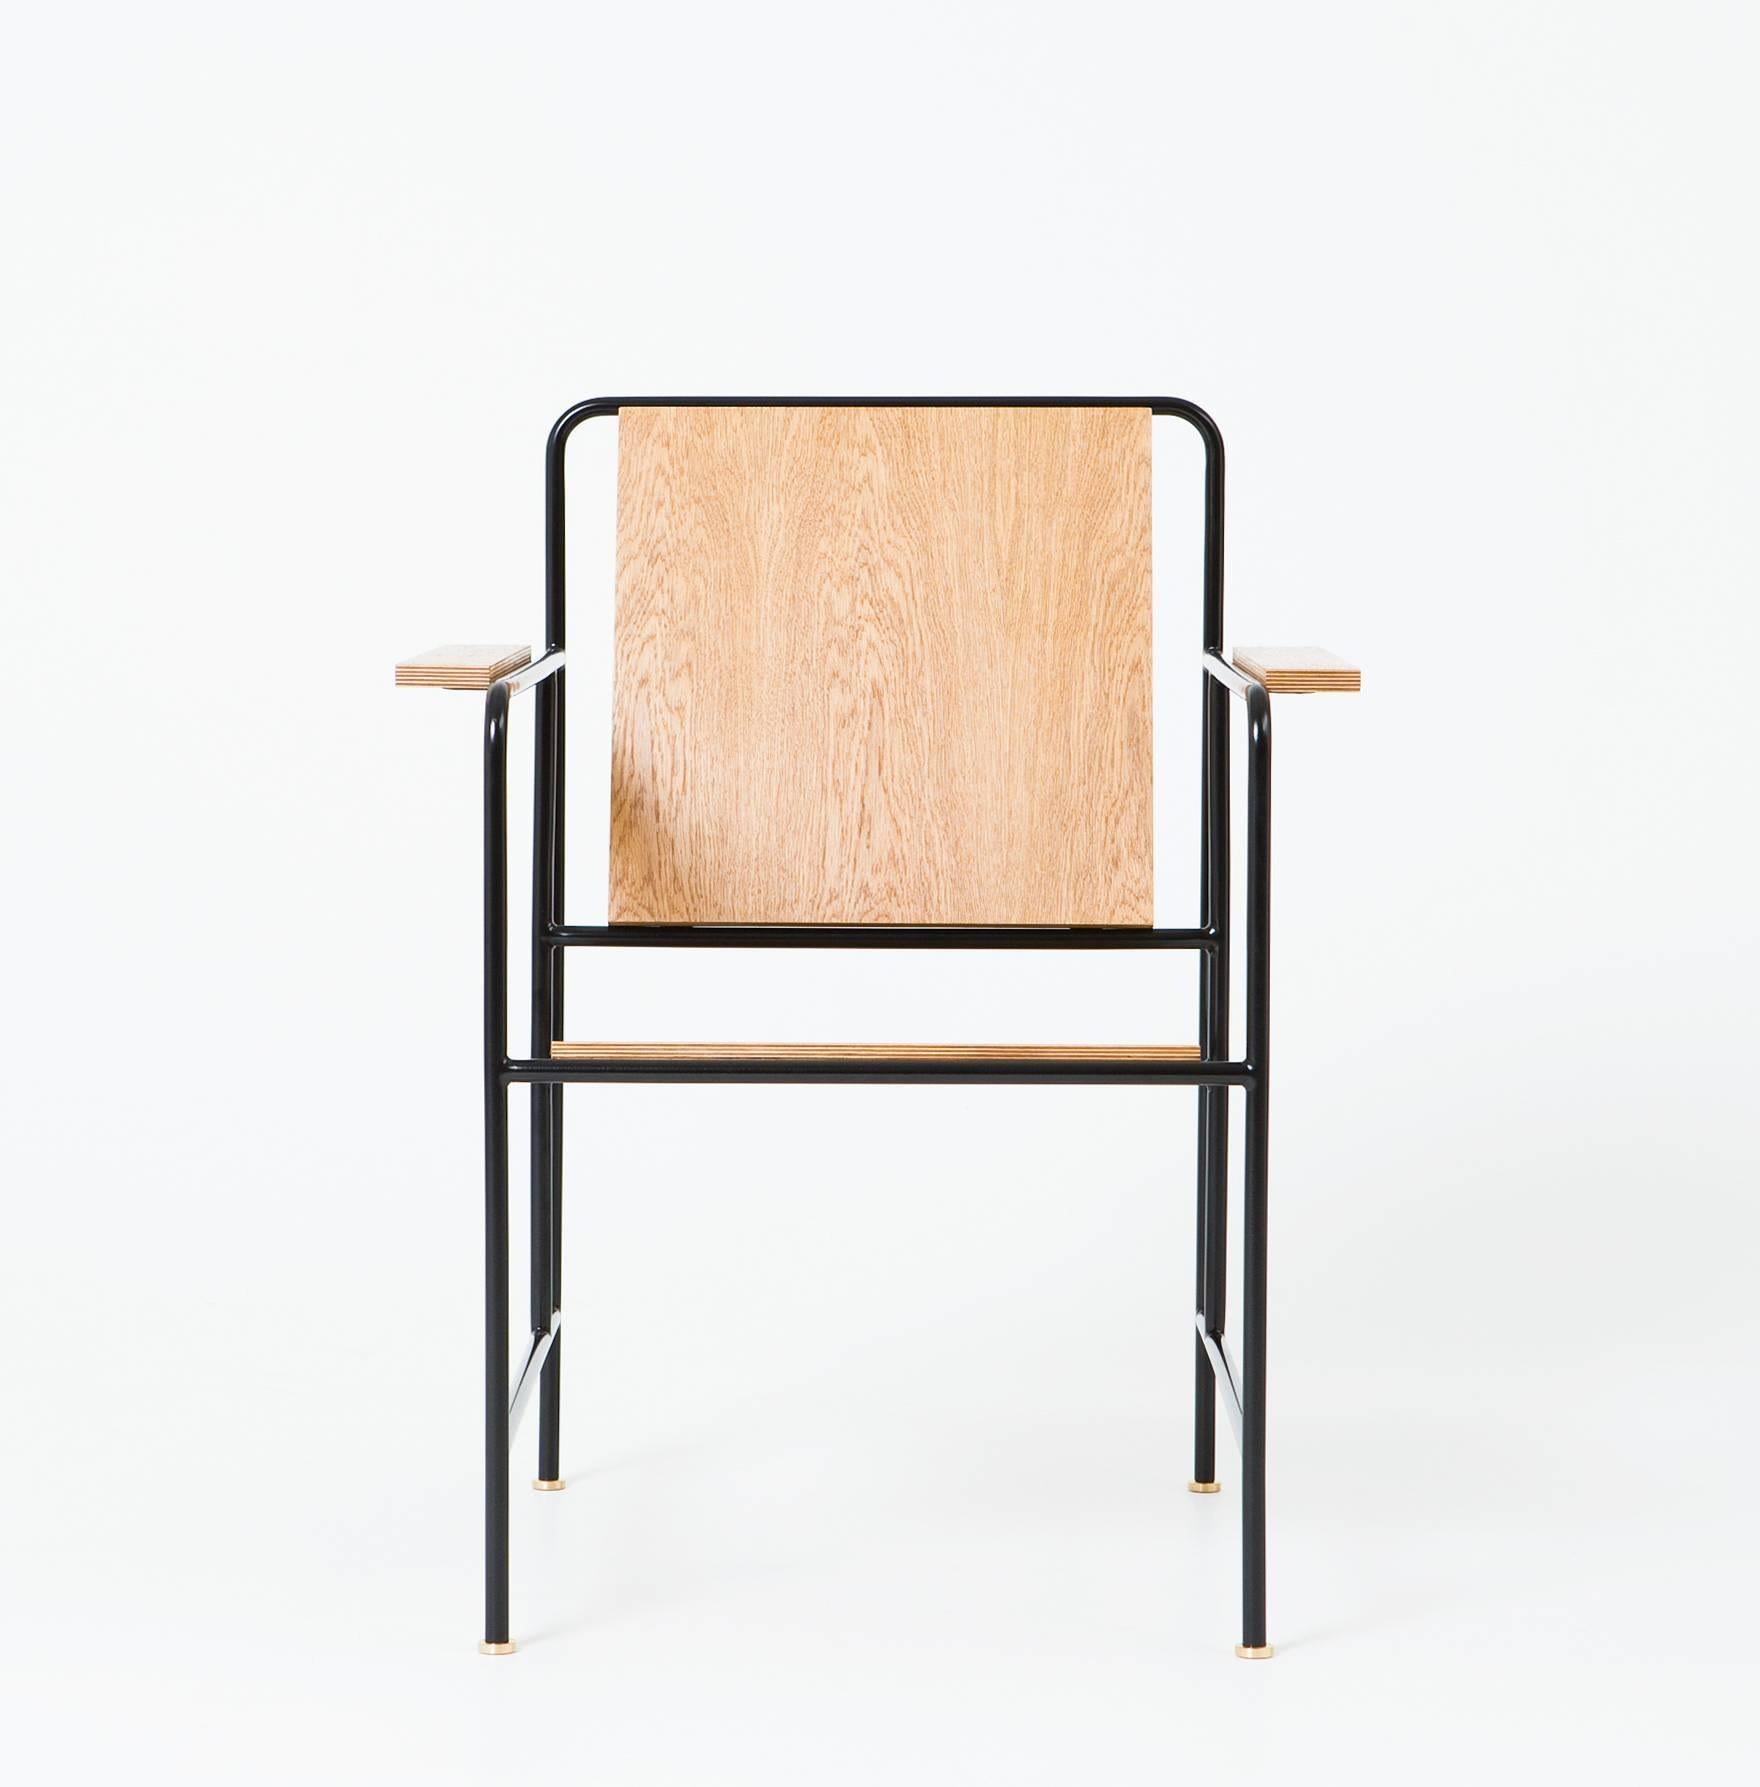 Veneer M Armchair 'Oak veneer and Metal structure' - Le Corbusier inspiration For Sale